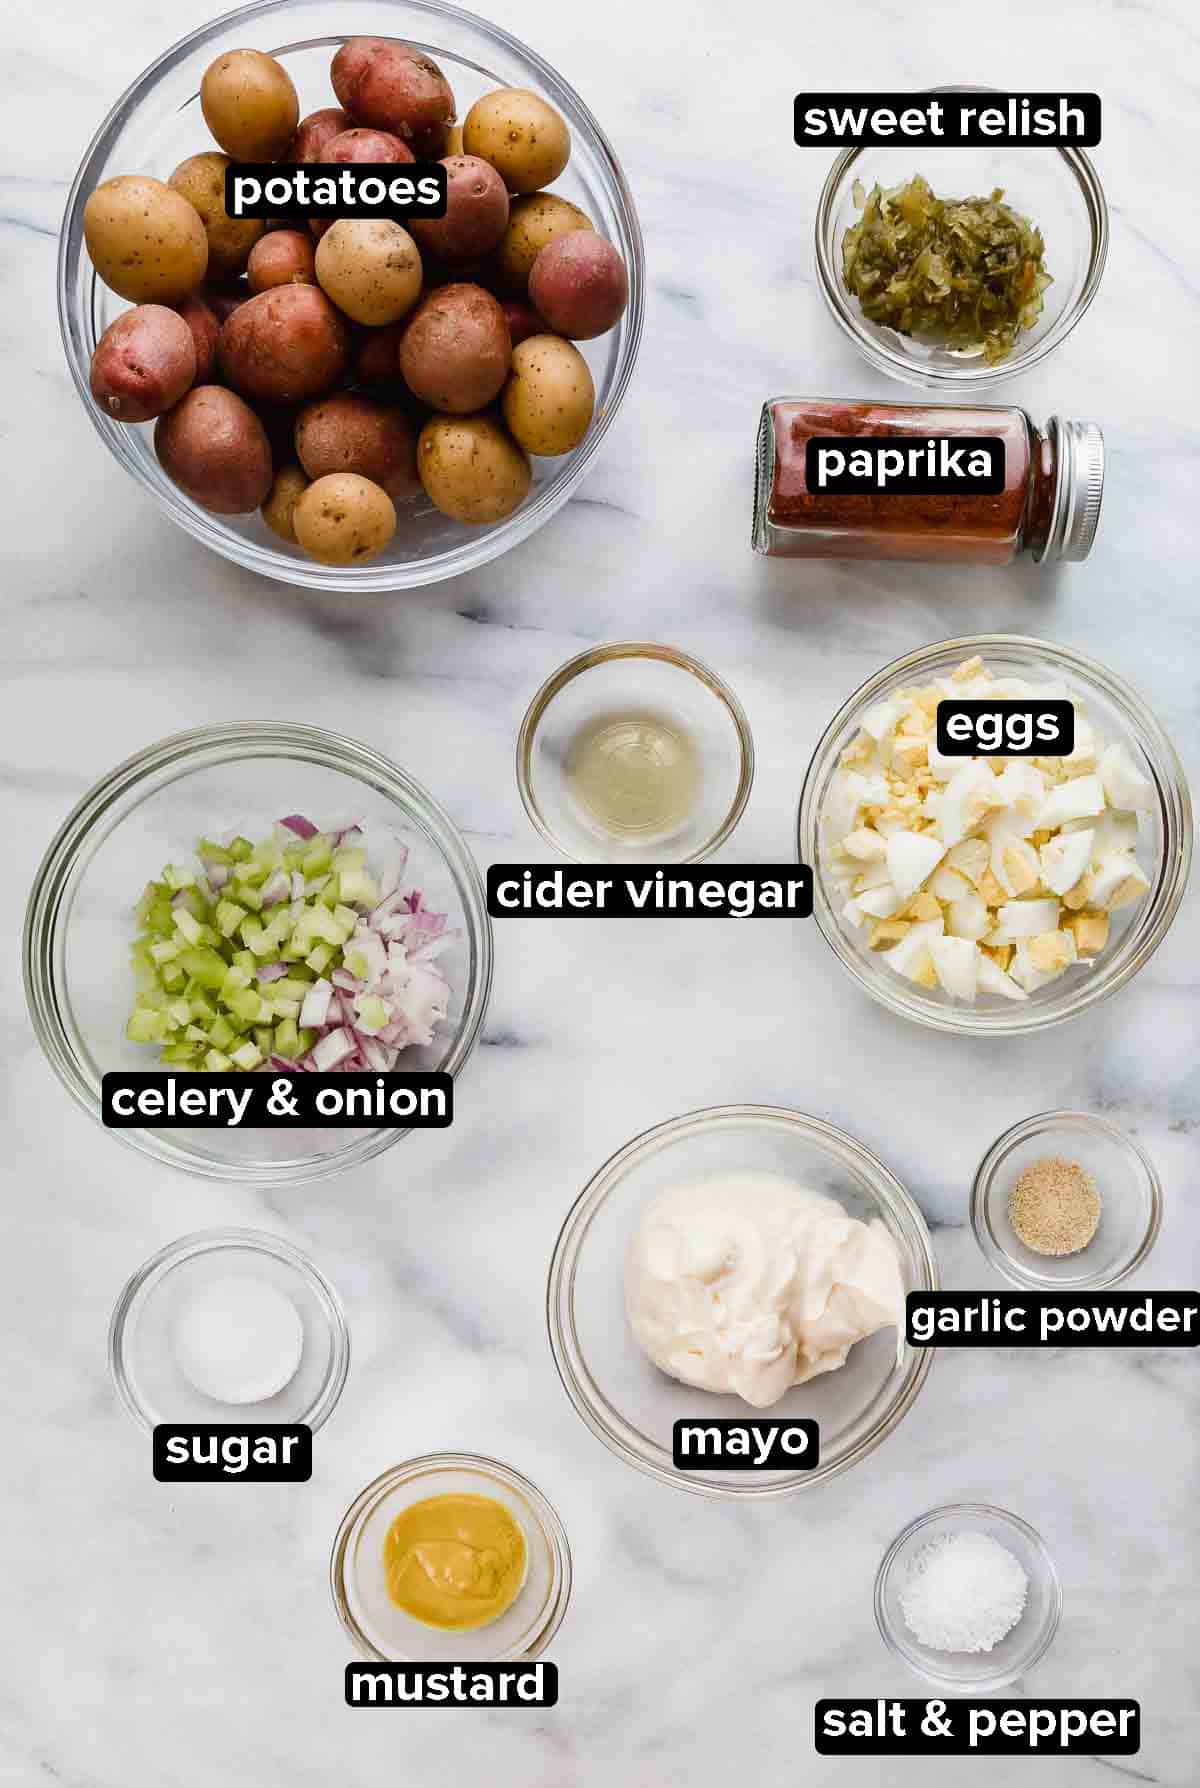 Baby Potato Salad ingredients in glass bowls: baby potatos, paprika, sweet relish, boiled eggs, sugar, mustard, mayo on a white background.